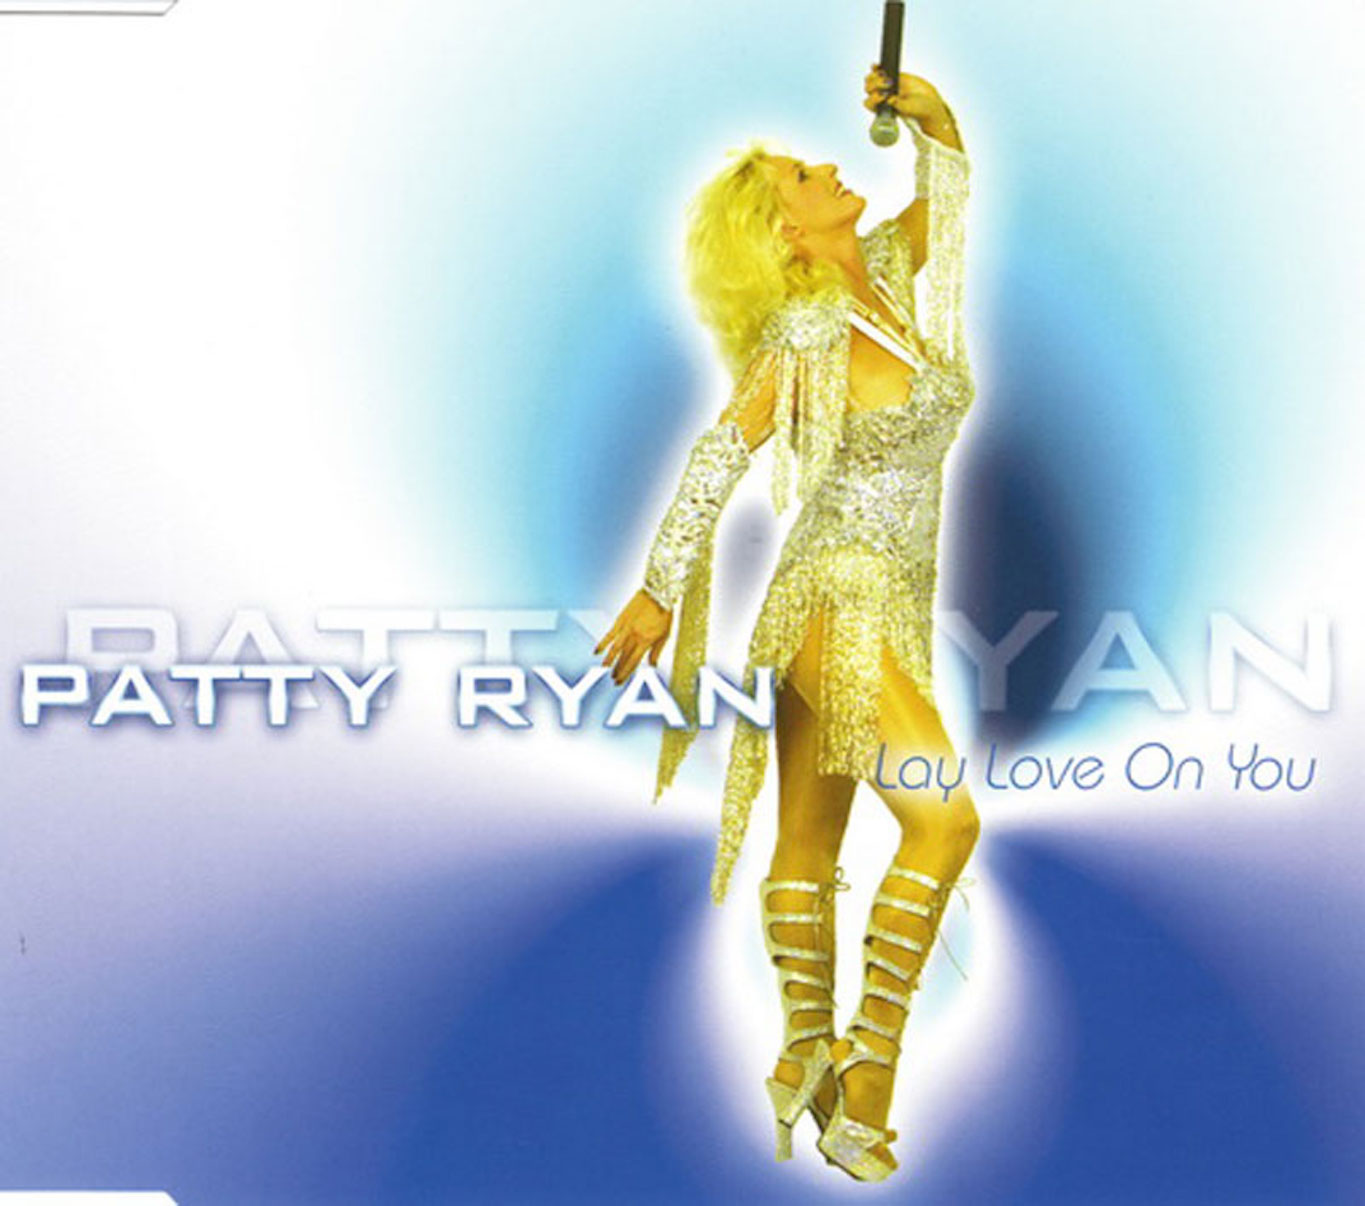 Lay on your love on me. Patty Ryan 1986. Patty Ryan обложки альбомов. Patty Ryan фото.